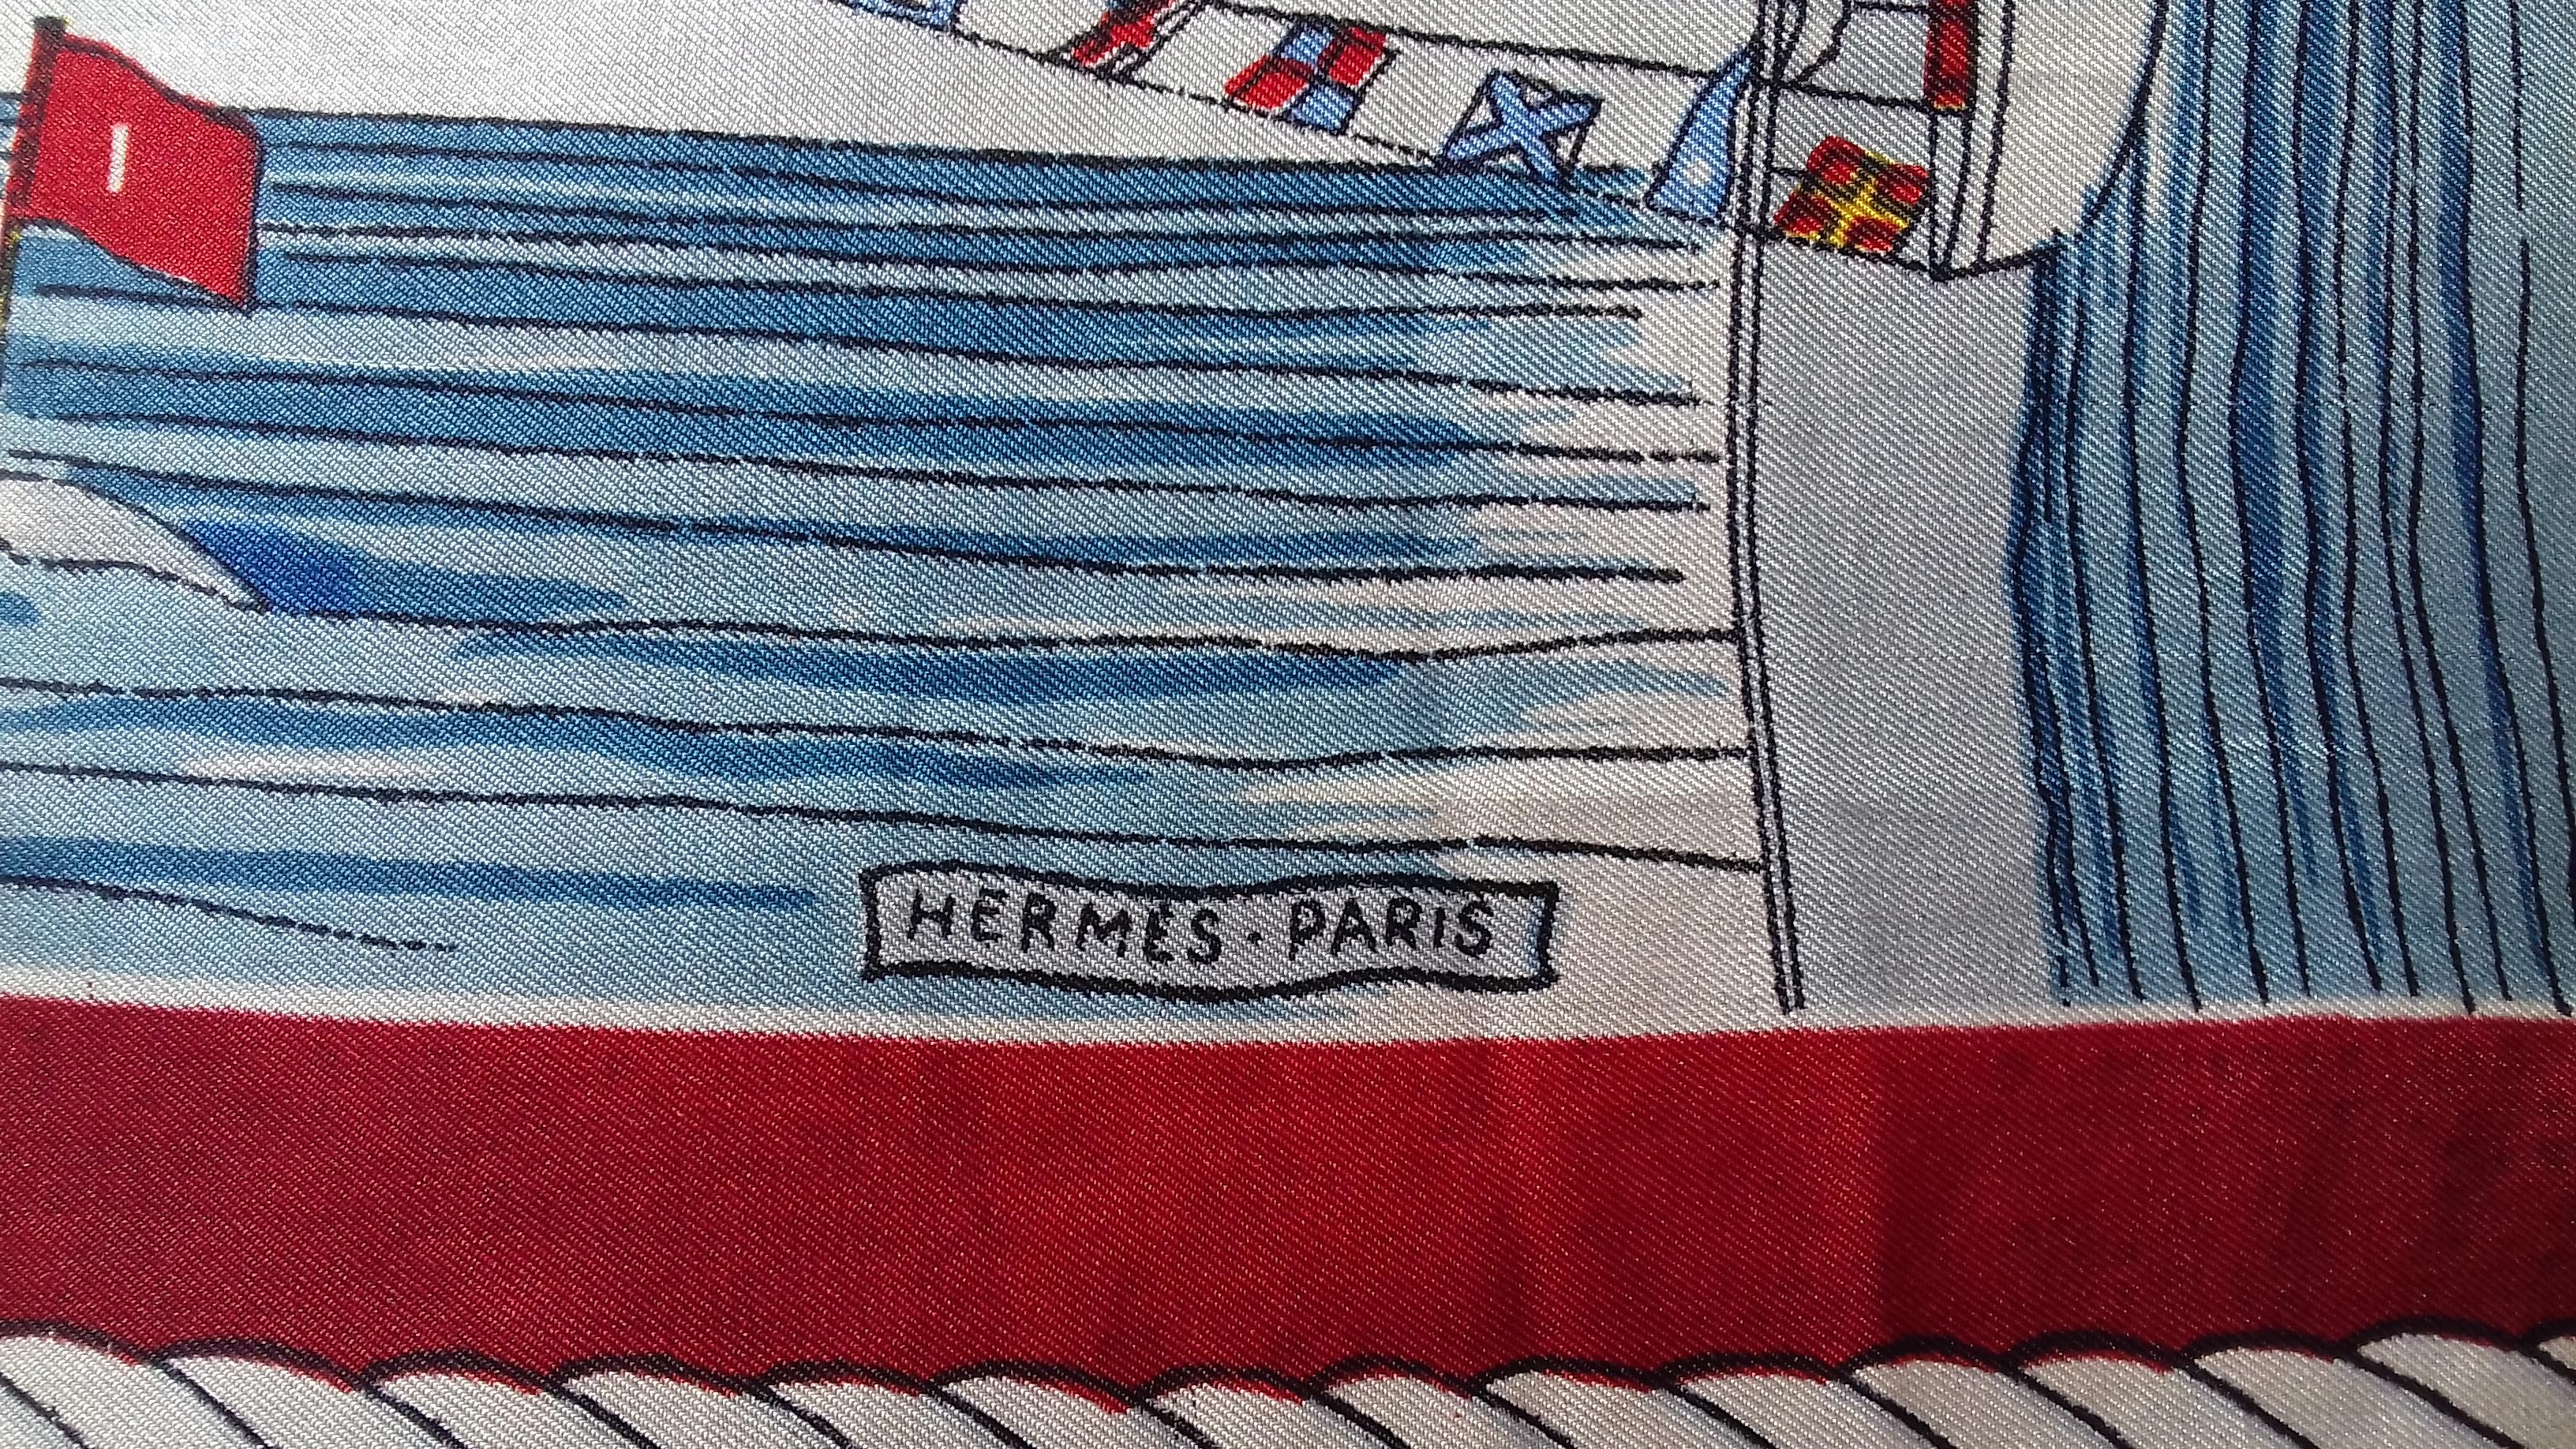 Super Rare Authentic Hermès Scarf

Pattern: 